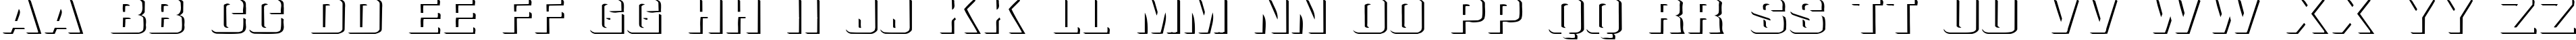 Пример написания английского алфавита шрифтом Relief Grotesk Extended